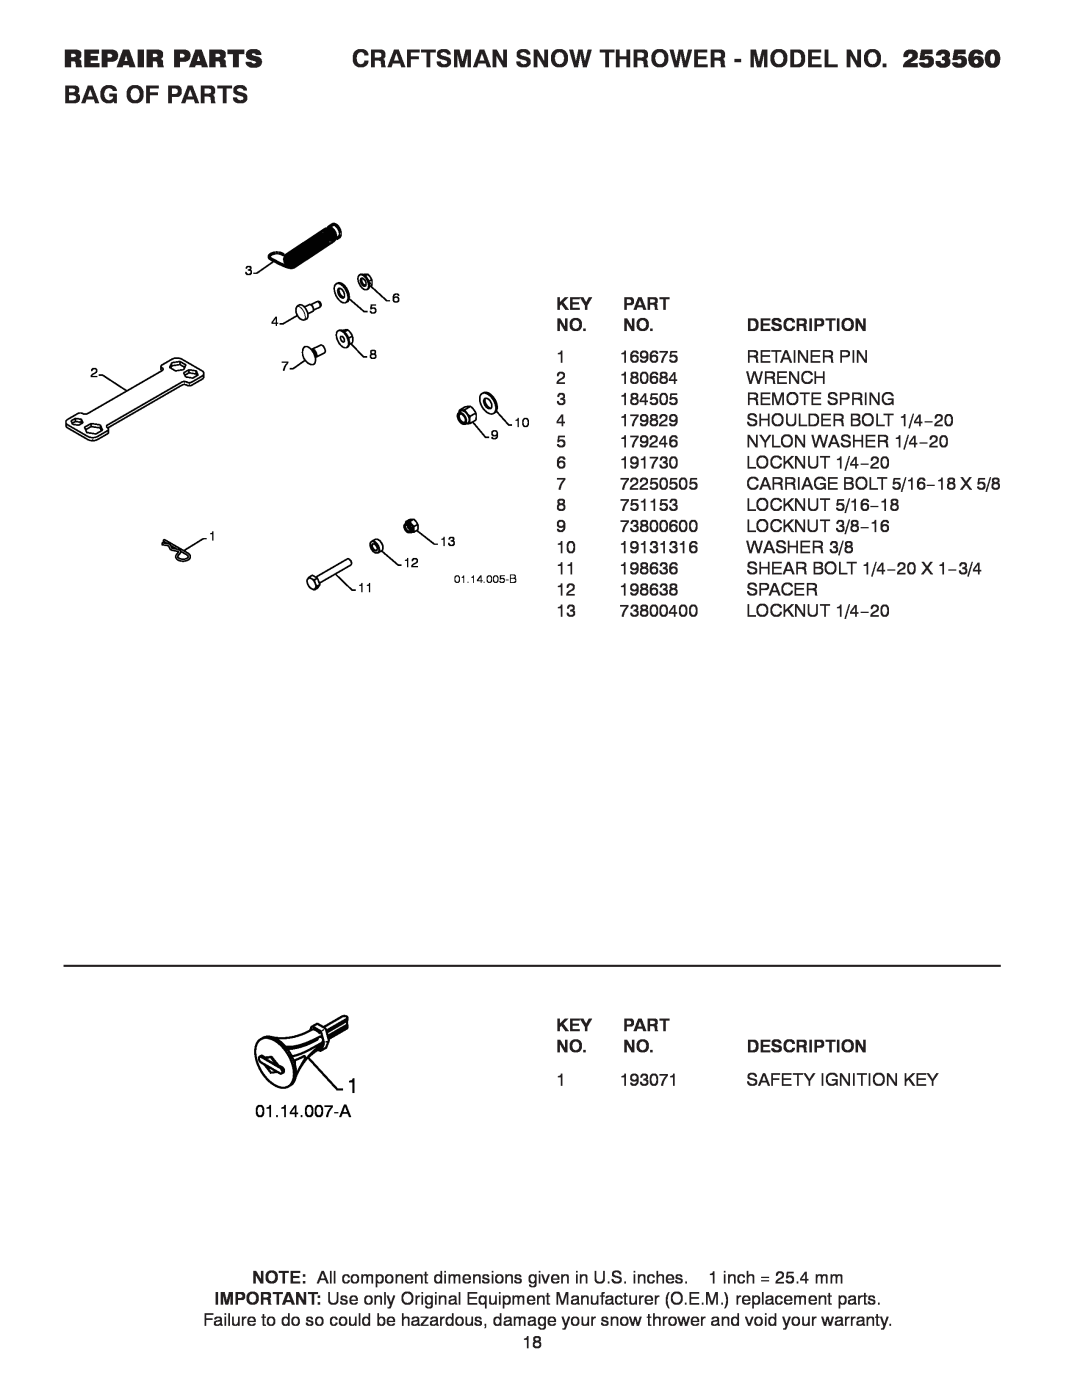 Craftsman manual REPAIR PARTS CRAFTSMAN SNOW THROWER - MODEL NO. 253560 BAG OF PARTS, 193071, Safety Ignition Key, Part 